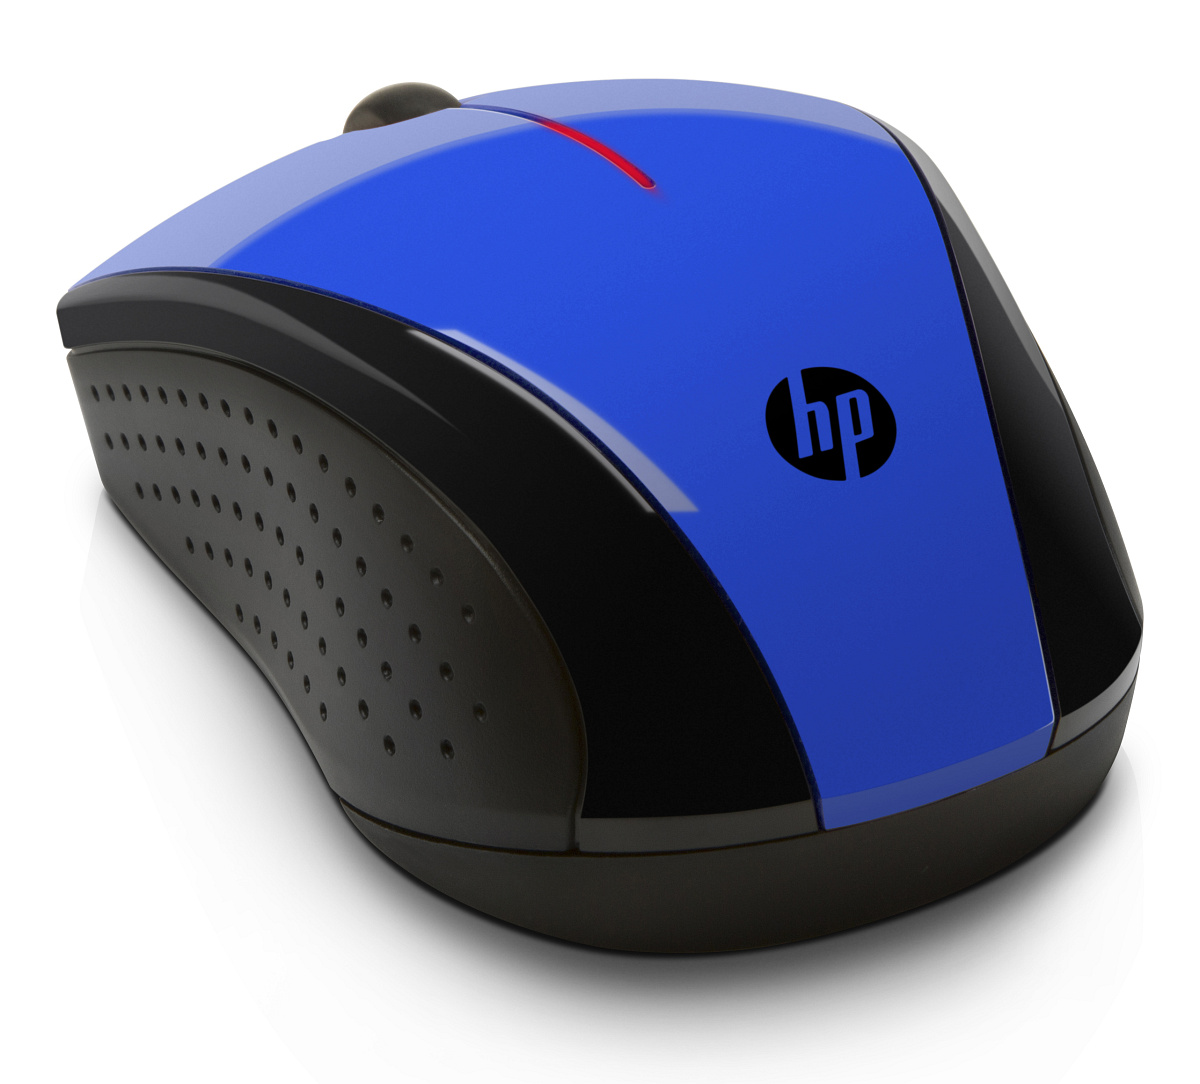 Bezdrátová myš HP X3000 - cobalt blue (N4G63AA)